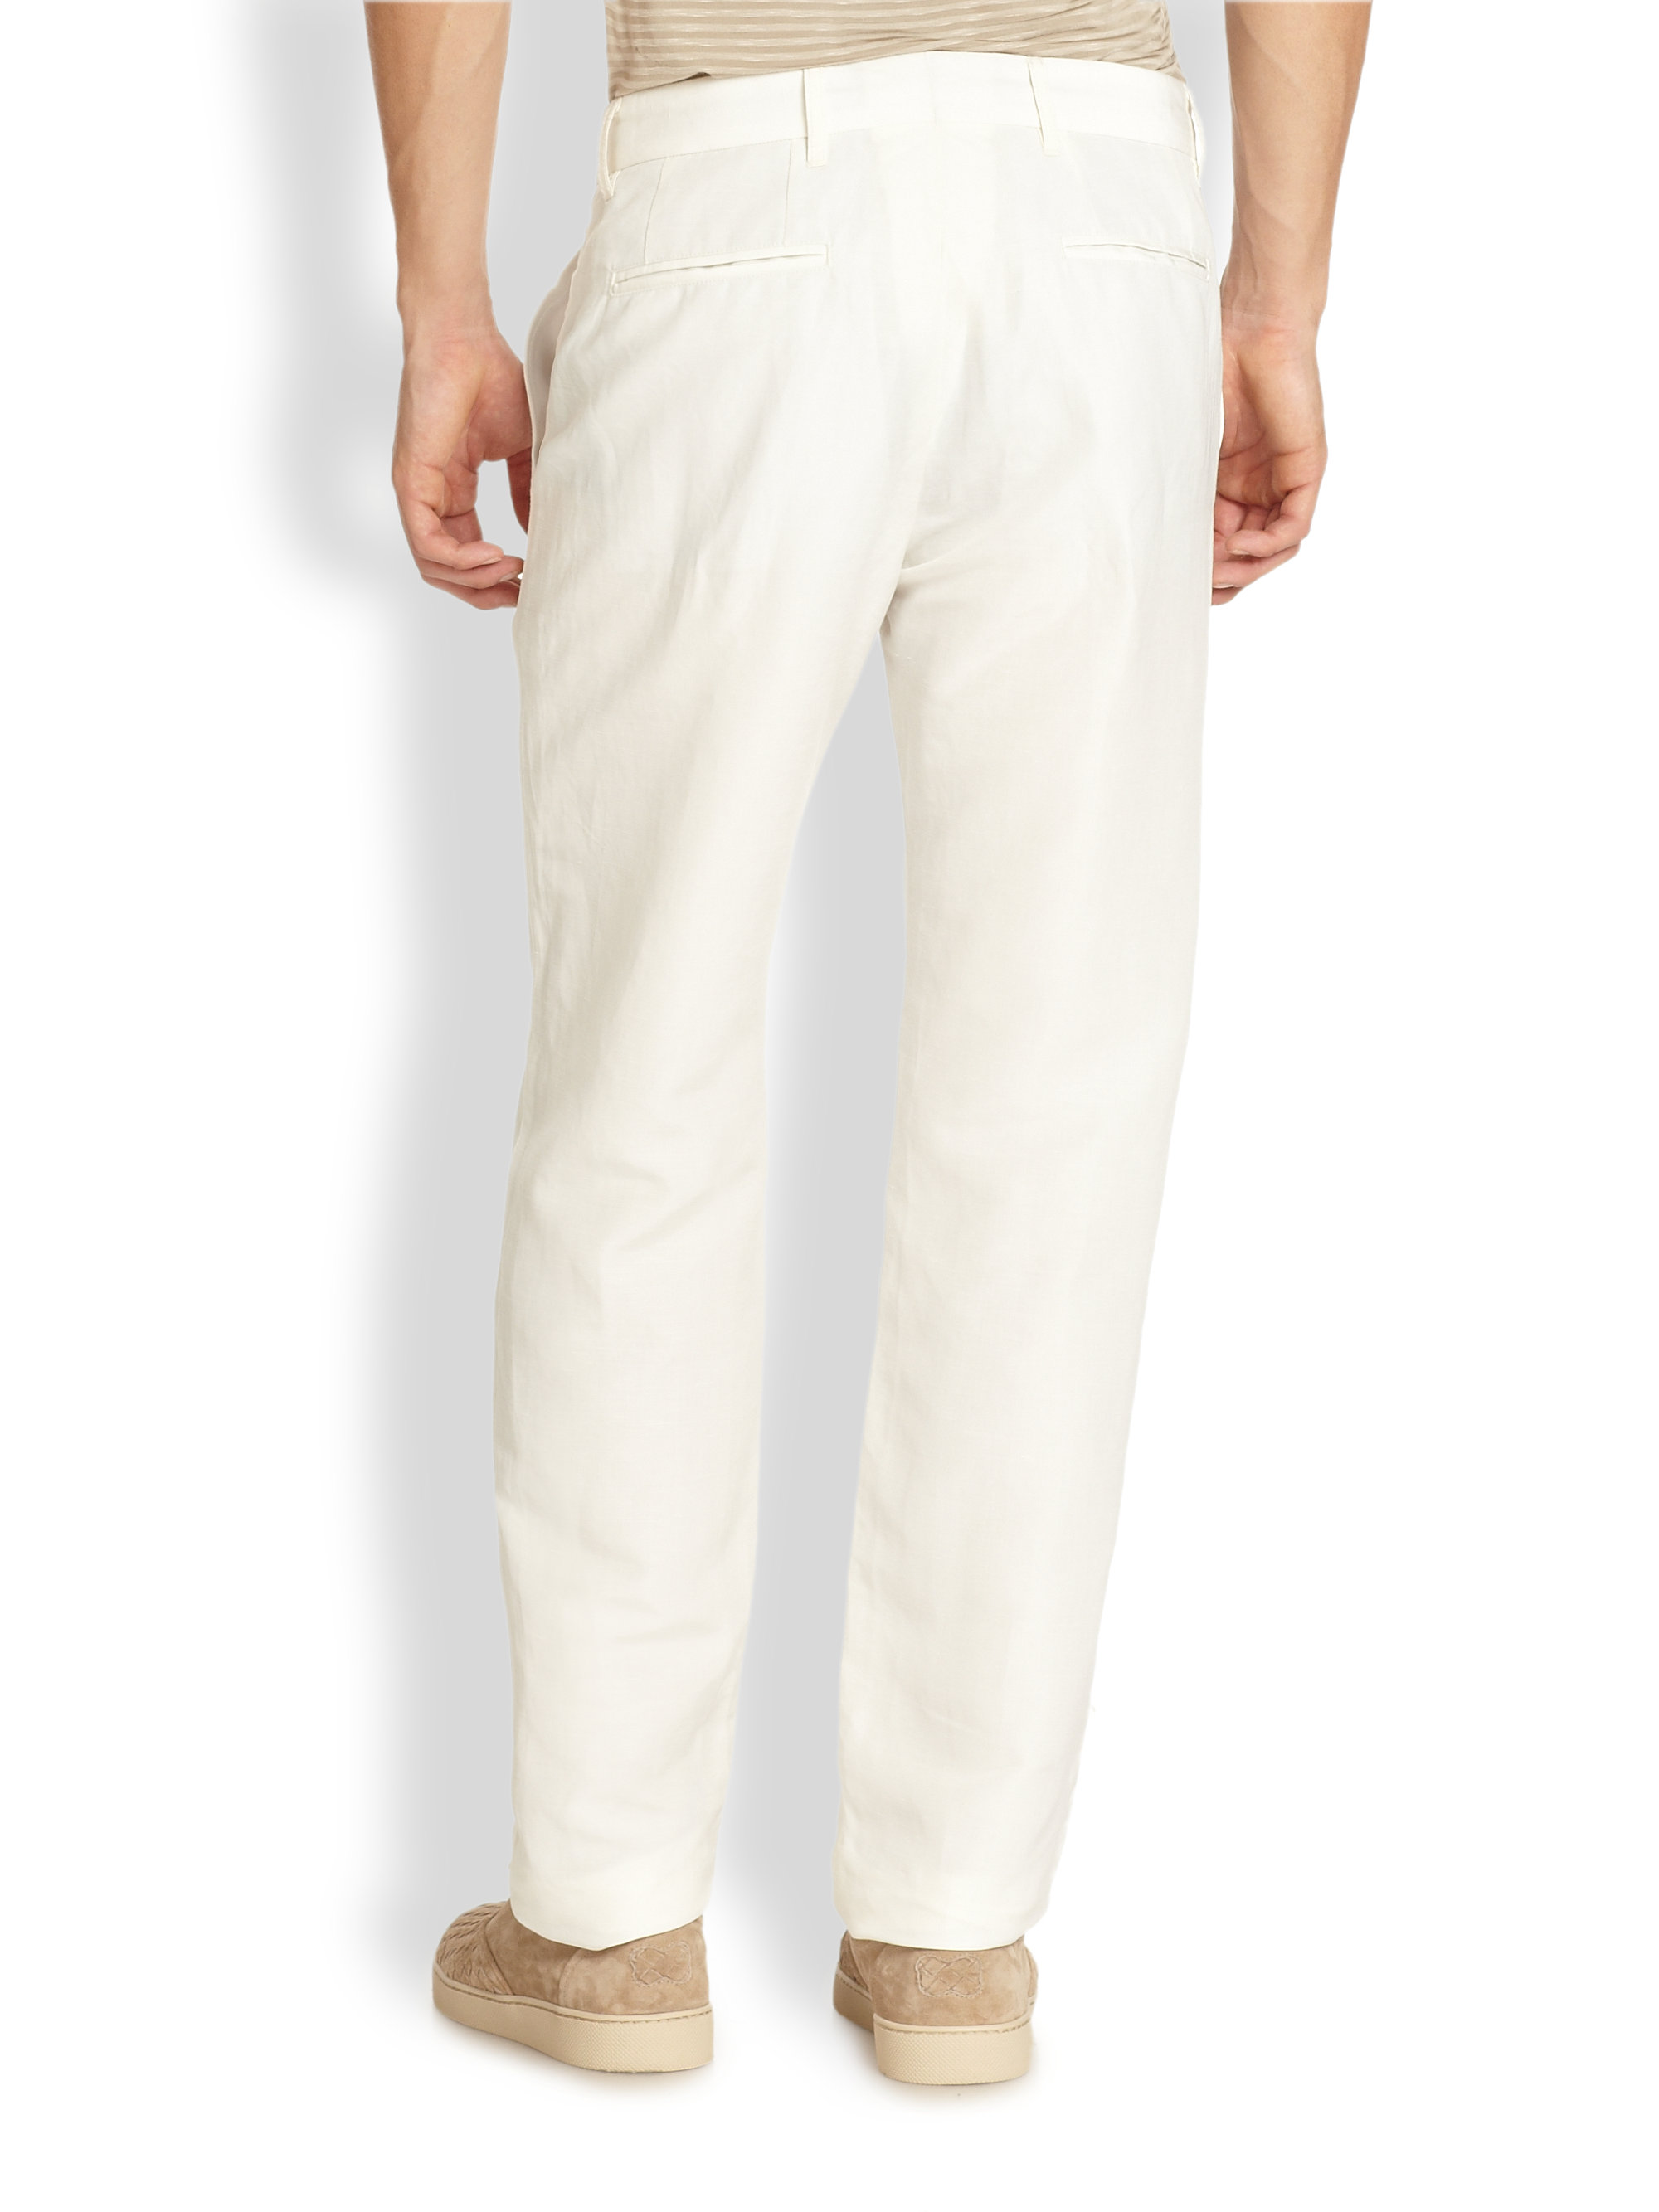 Armani Linen & Silk Pants in Soft Tan (Natural) for Men - Lyst